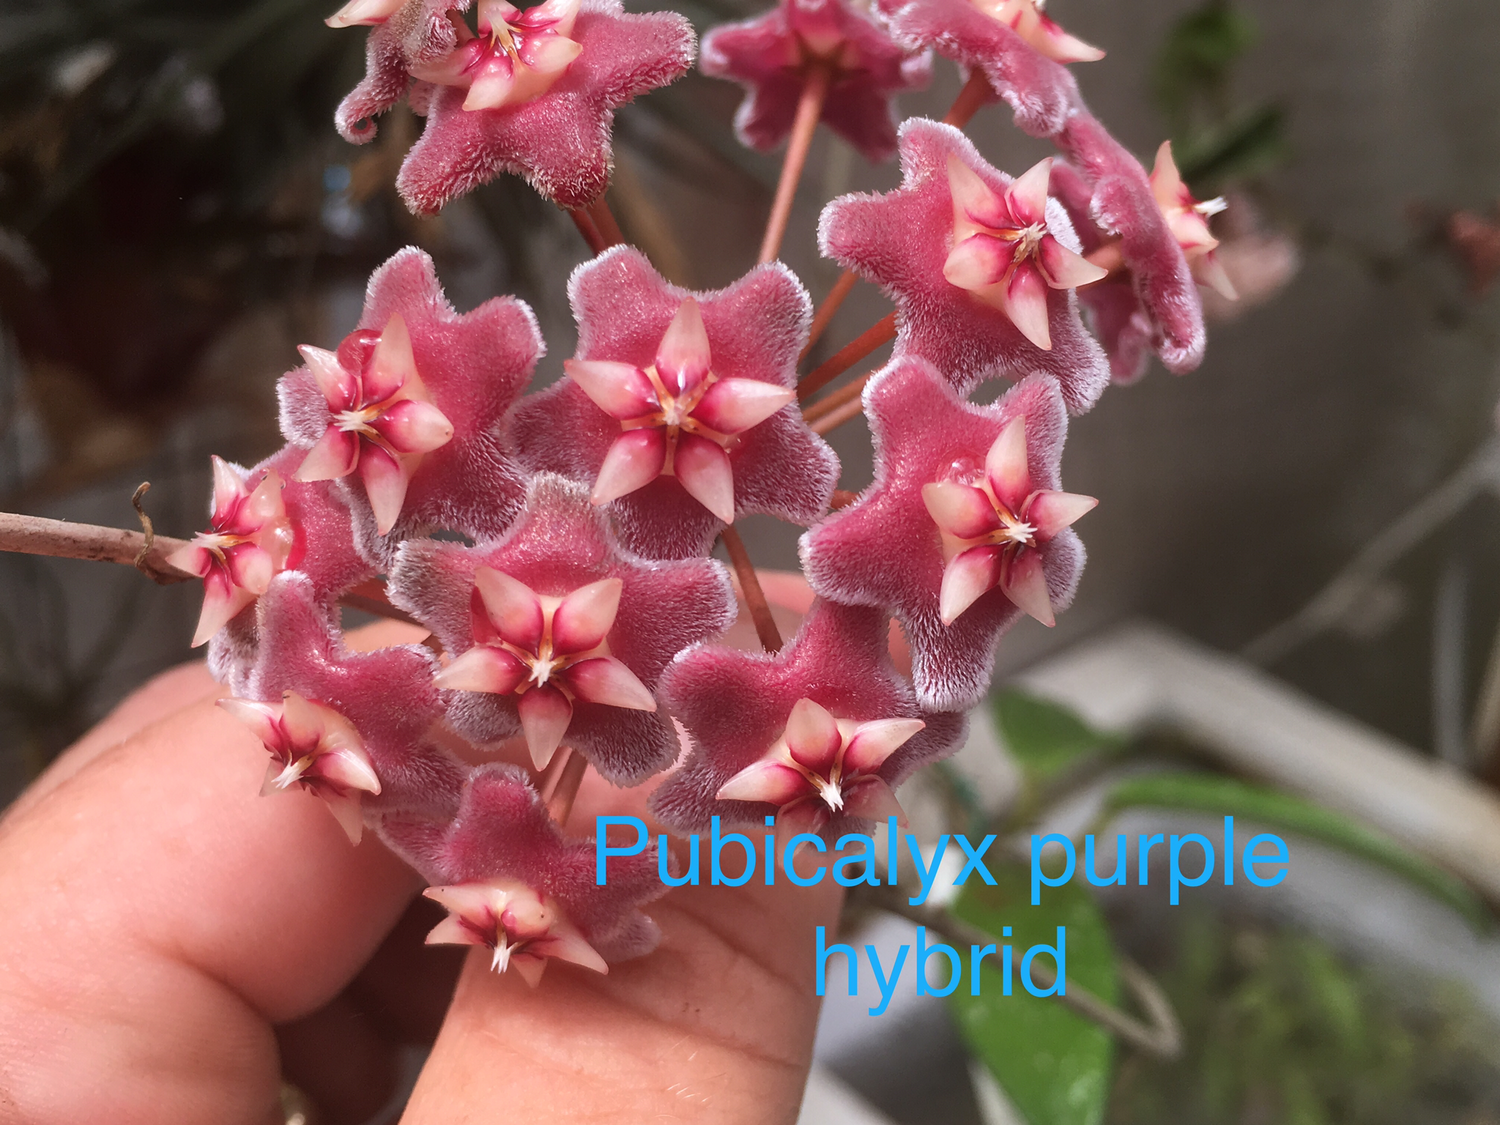 Hoya pubicalyx purple hybrid